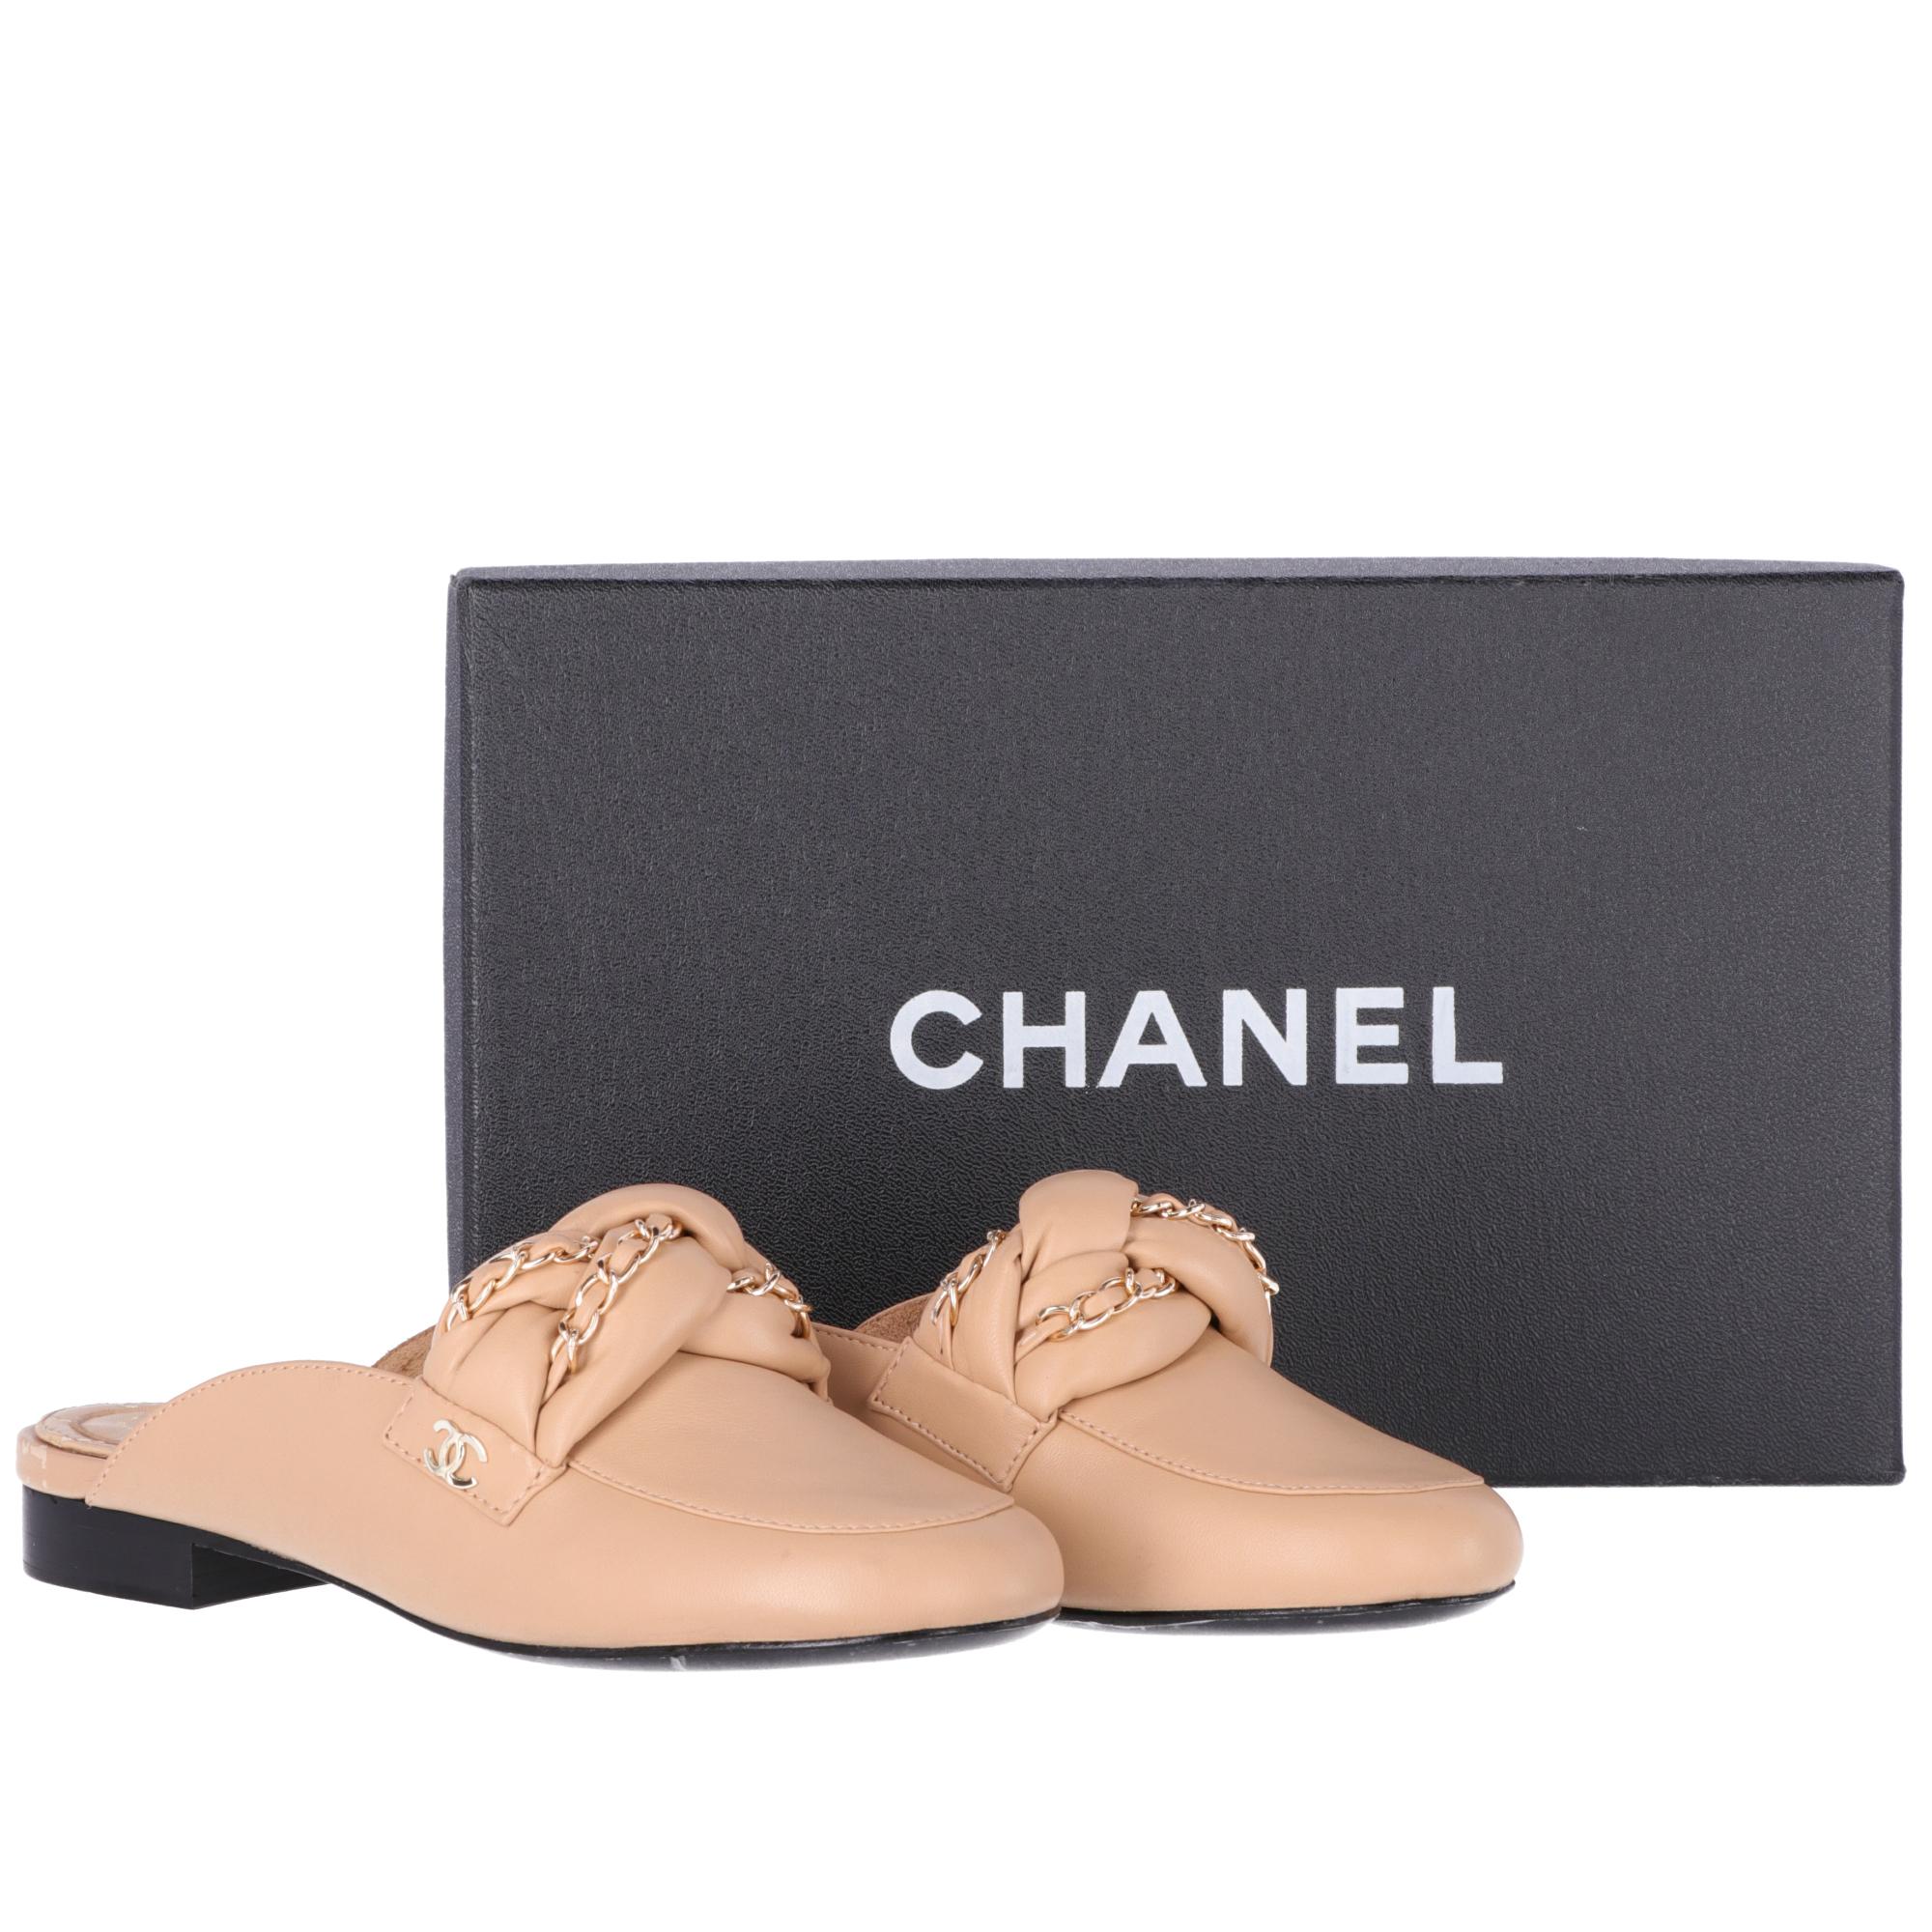 Women's 2000s Chanel Beige Leather Mules